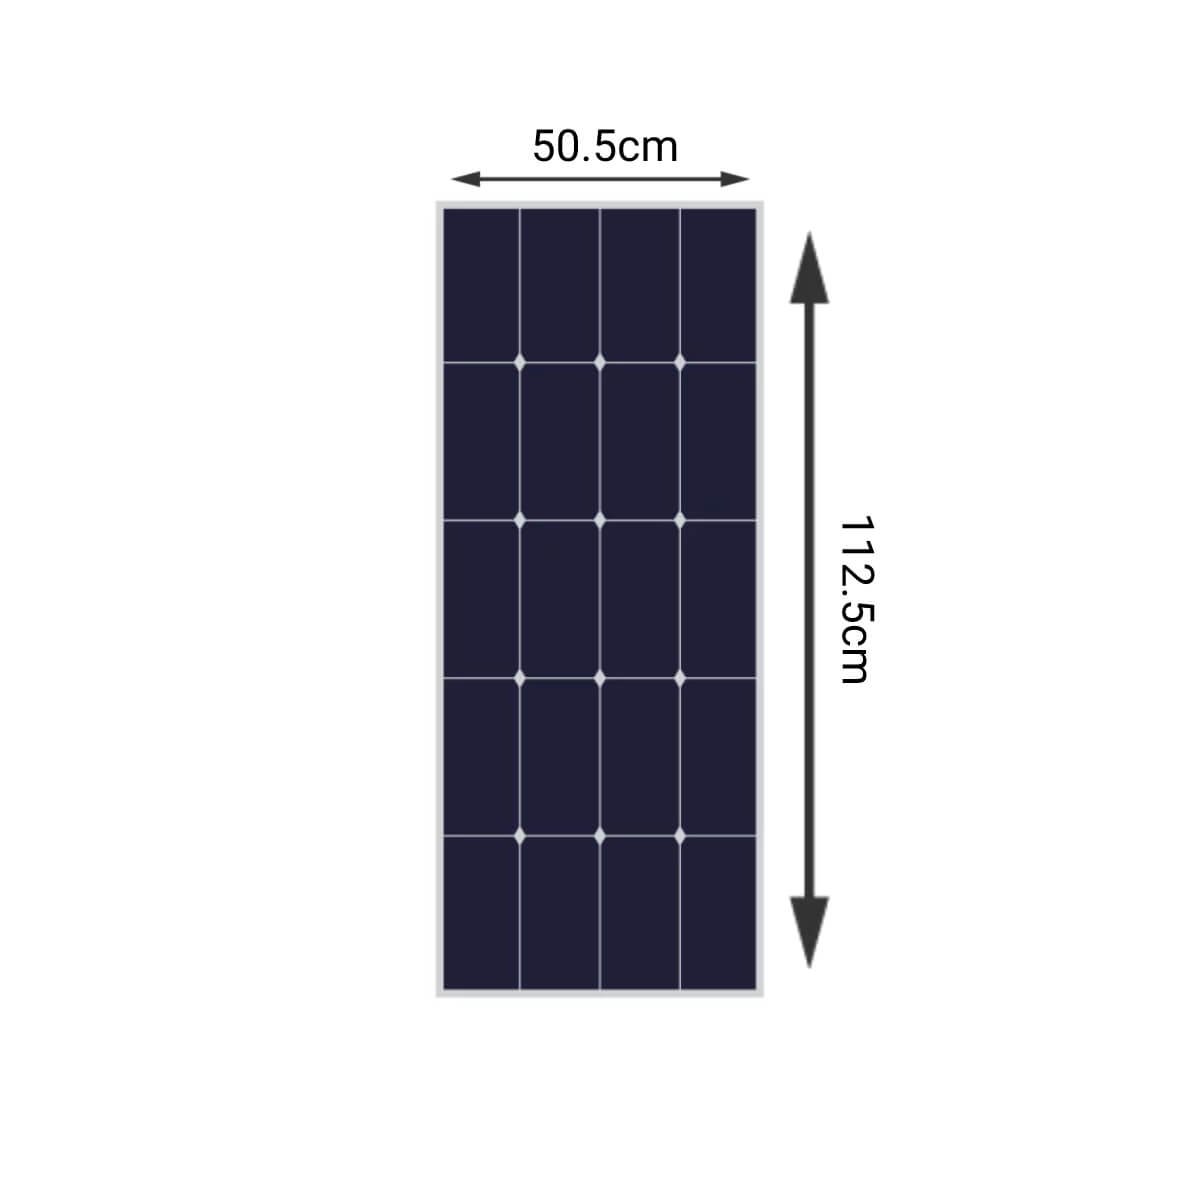 200W Flexible Solar Panel Kit – 2x 100W dimensions narrow